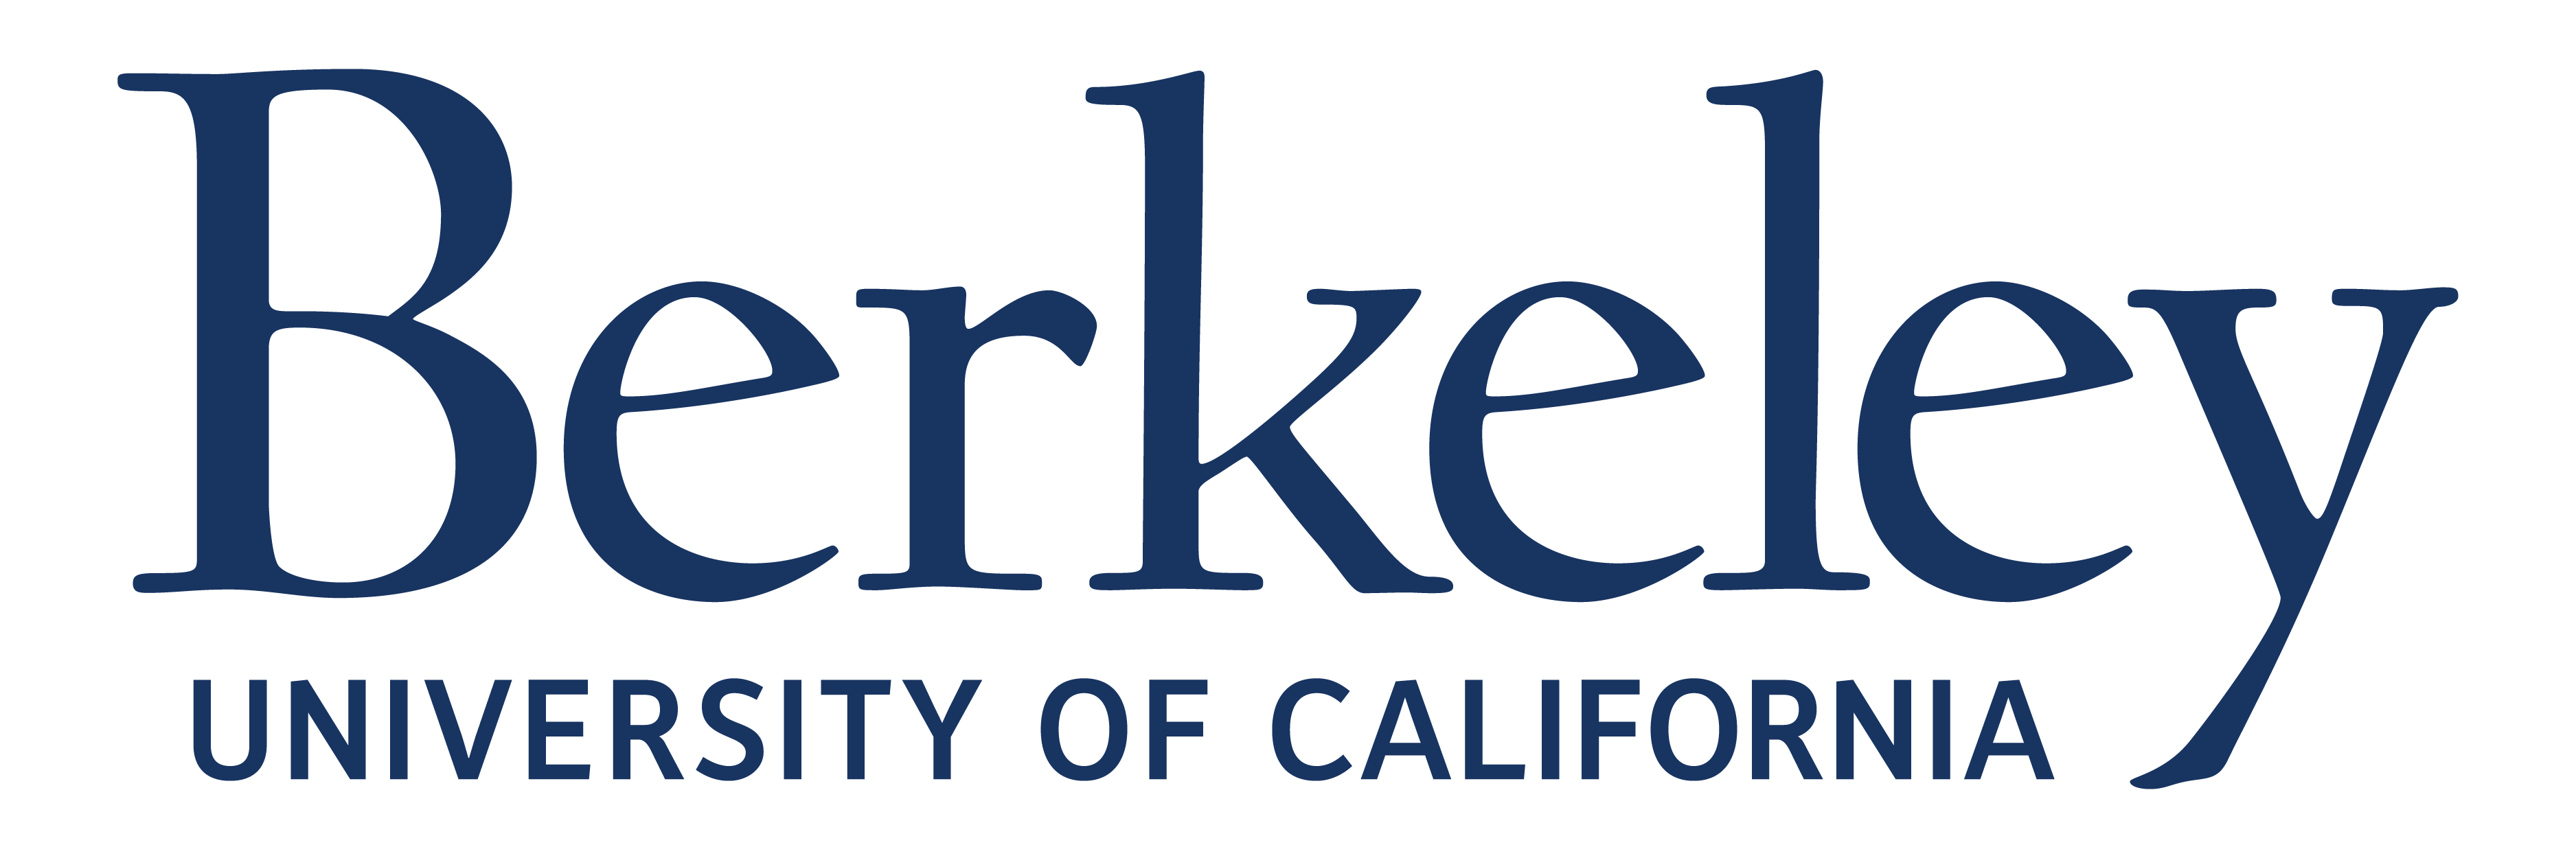 Berkeley_wordmark_blue.png